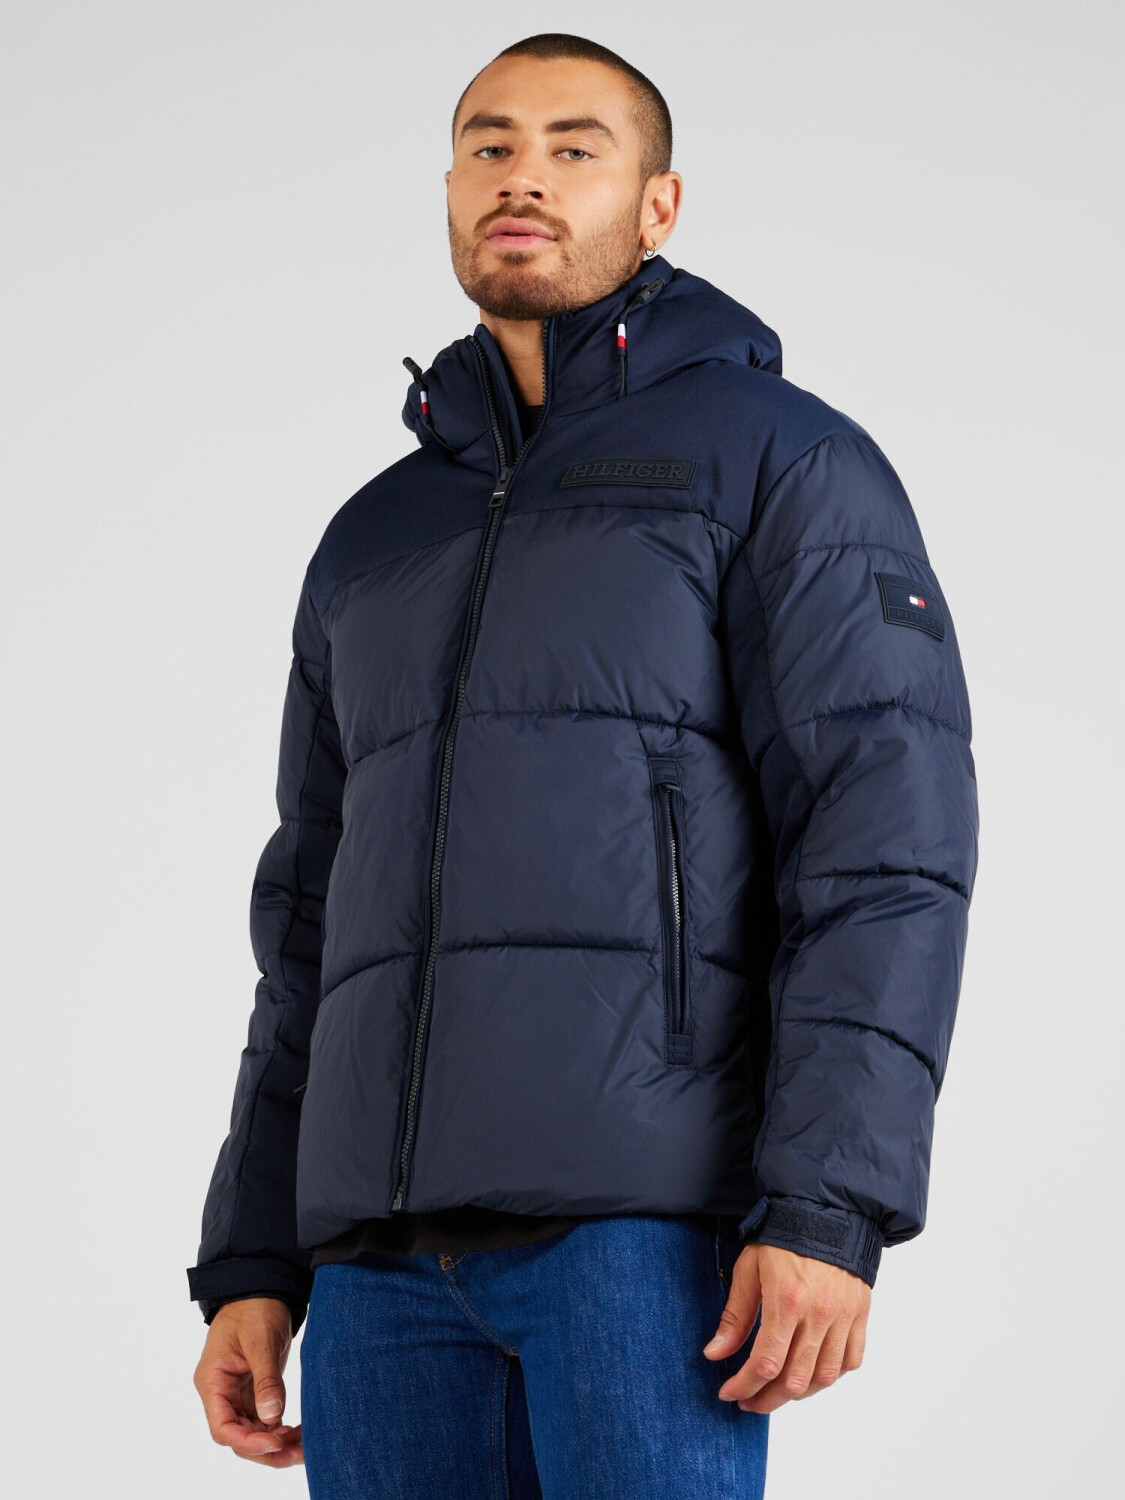 & Puffer NWT Coats Tommy Hilfiger jackets Jacket -